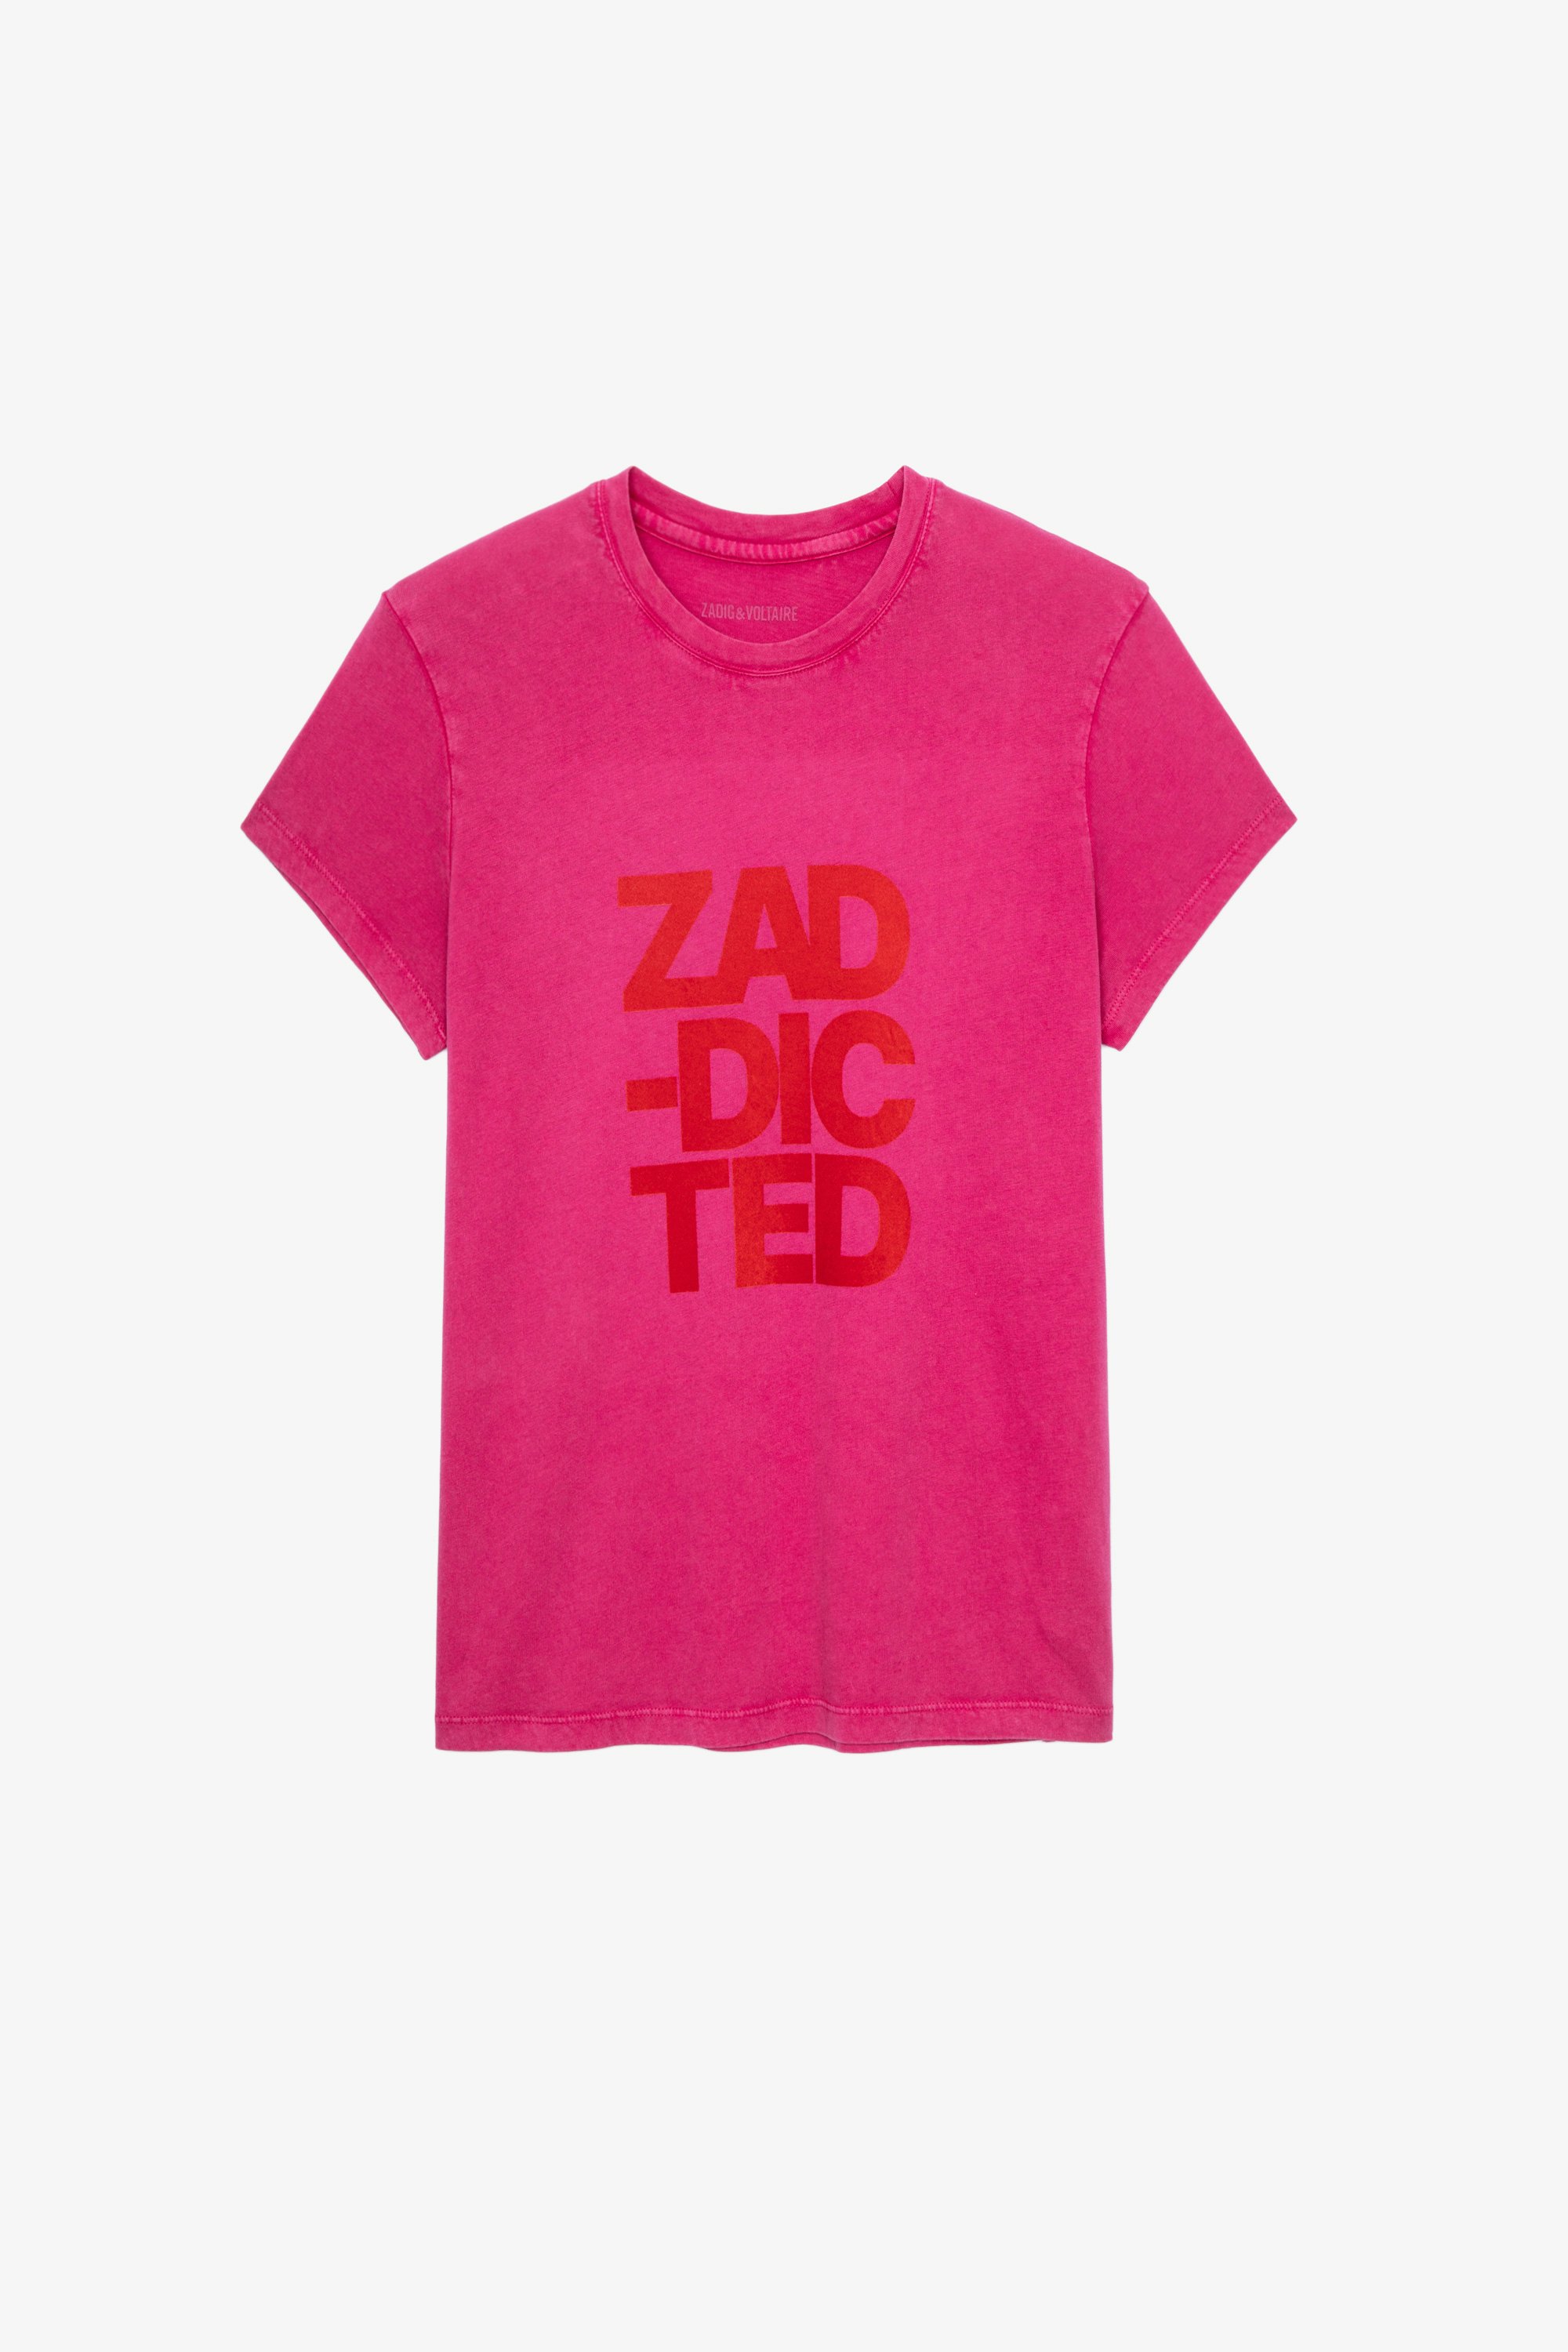 T-Shirt Zoe Zaddicted Damen-T-Shirt aus rosafarbener Baumwolle mit Botschaft „Zaddicted“